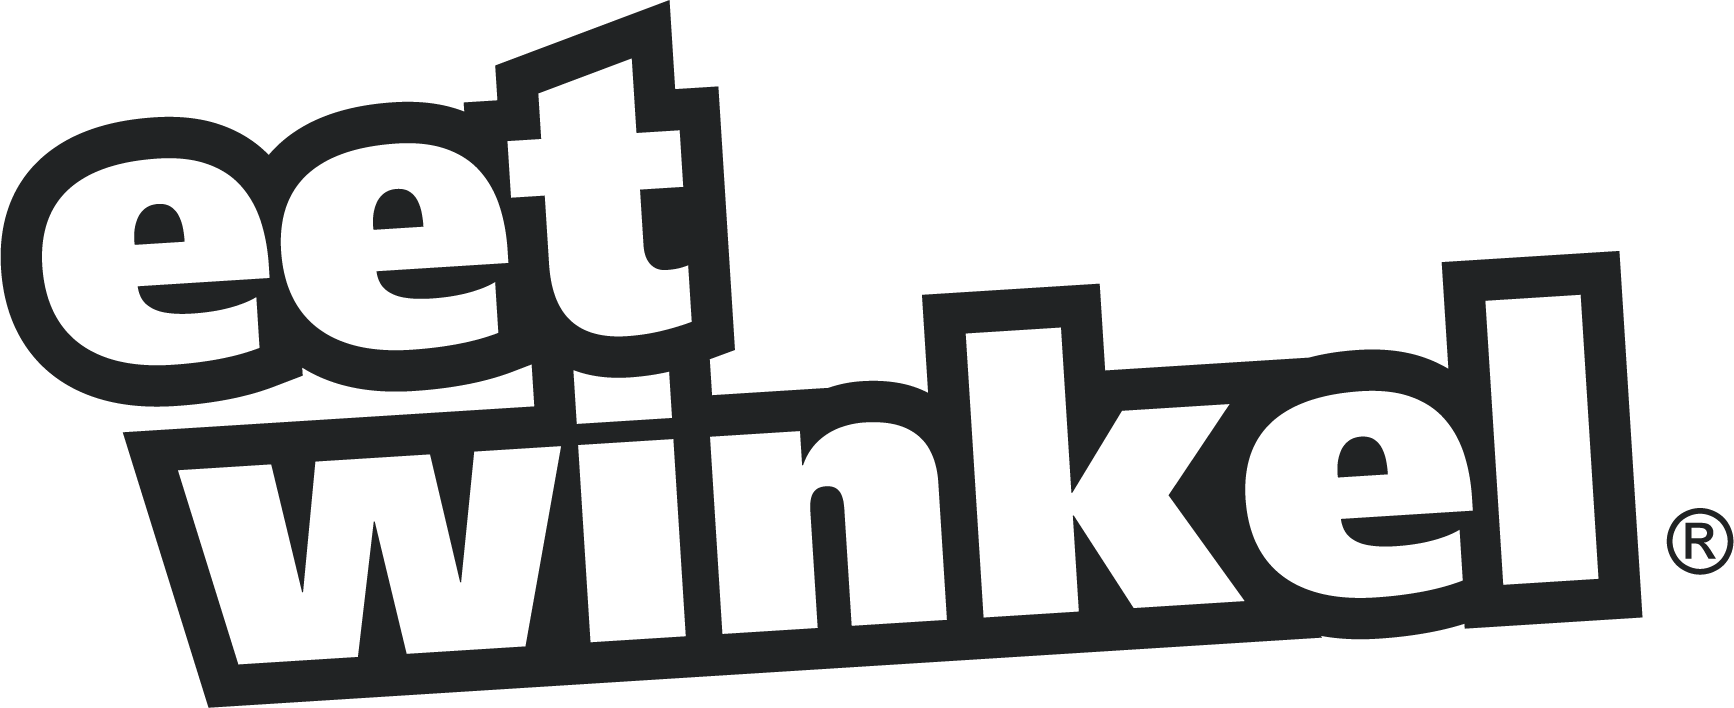 Eetwinkel logo